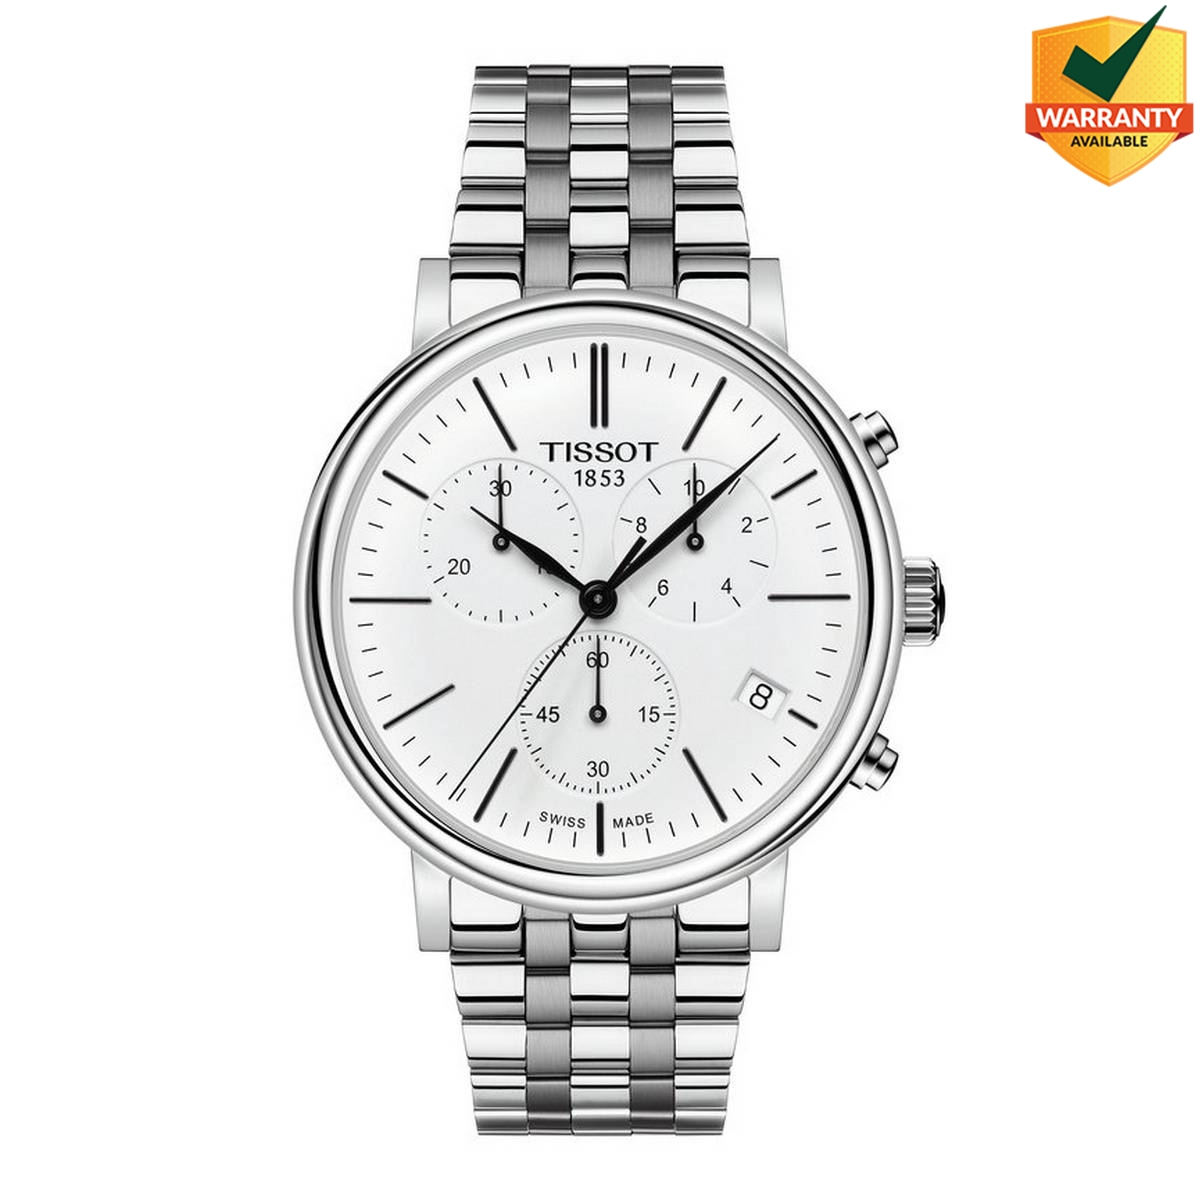 Carson Premium Chronograph Quartz - White Dial With Grey Stainless Steel Bracelet Men's Watch - T122.417.11.011.00